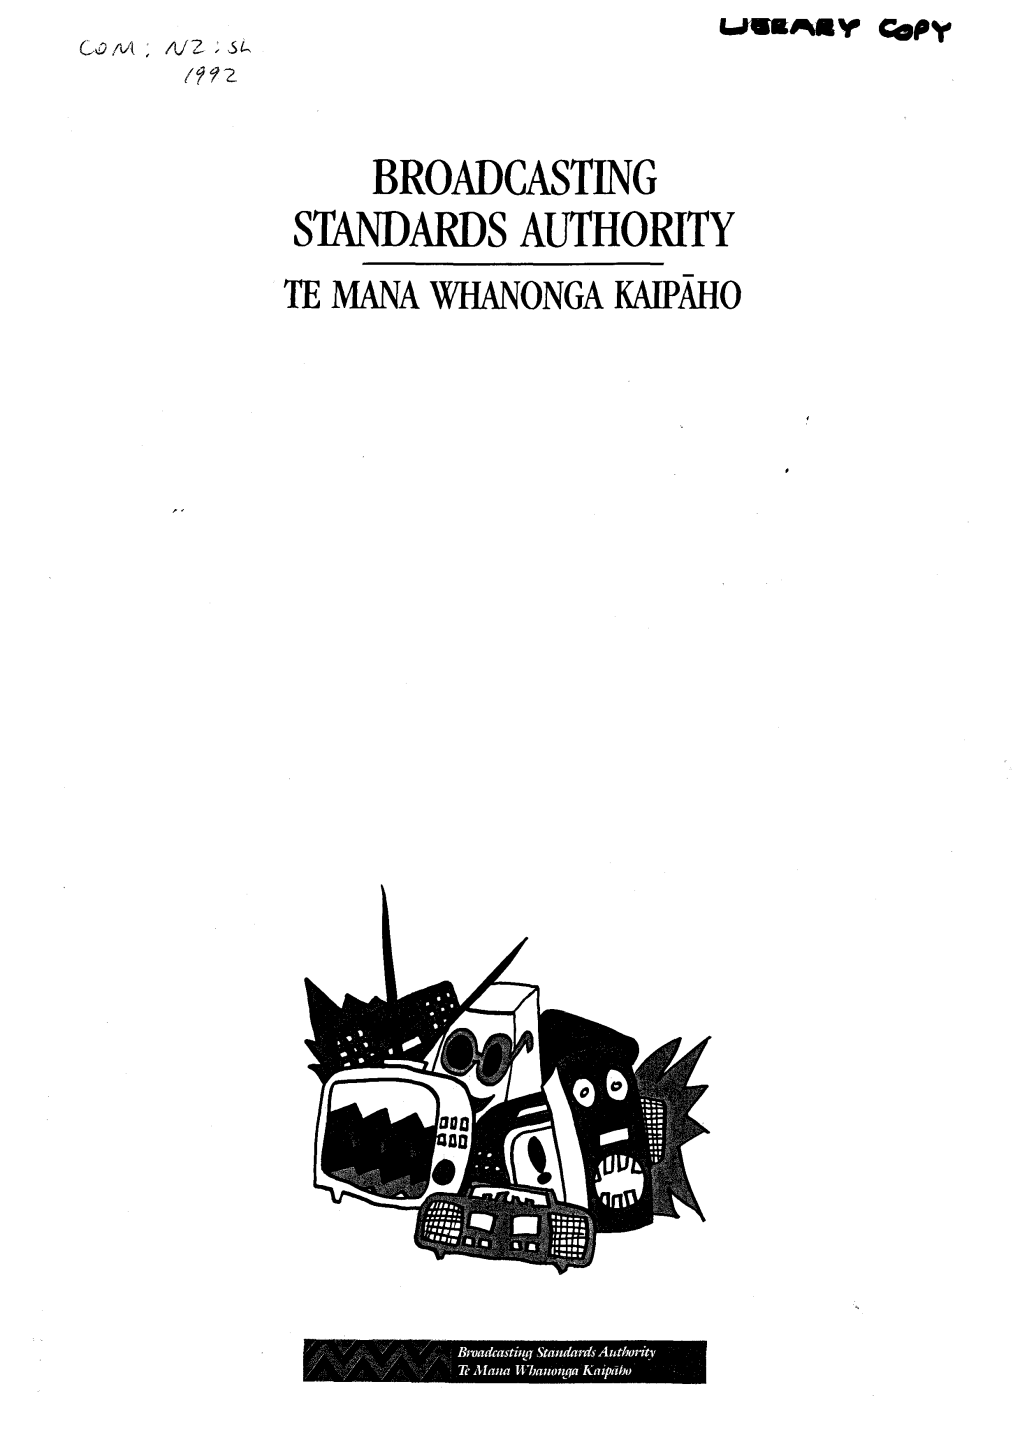 BSA Annual Report 1992